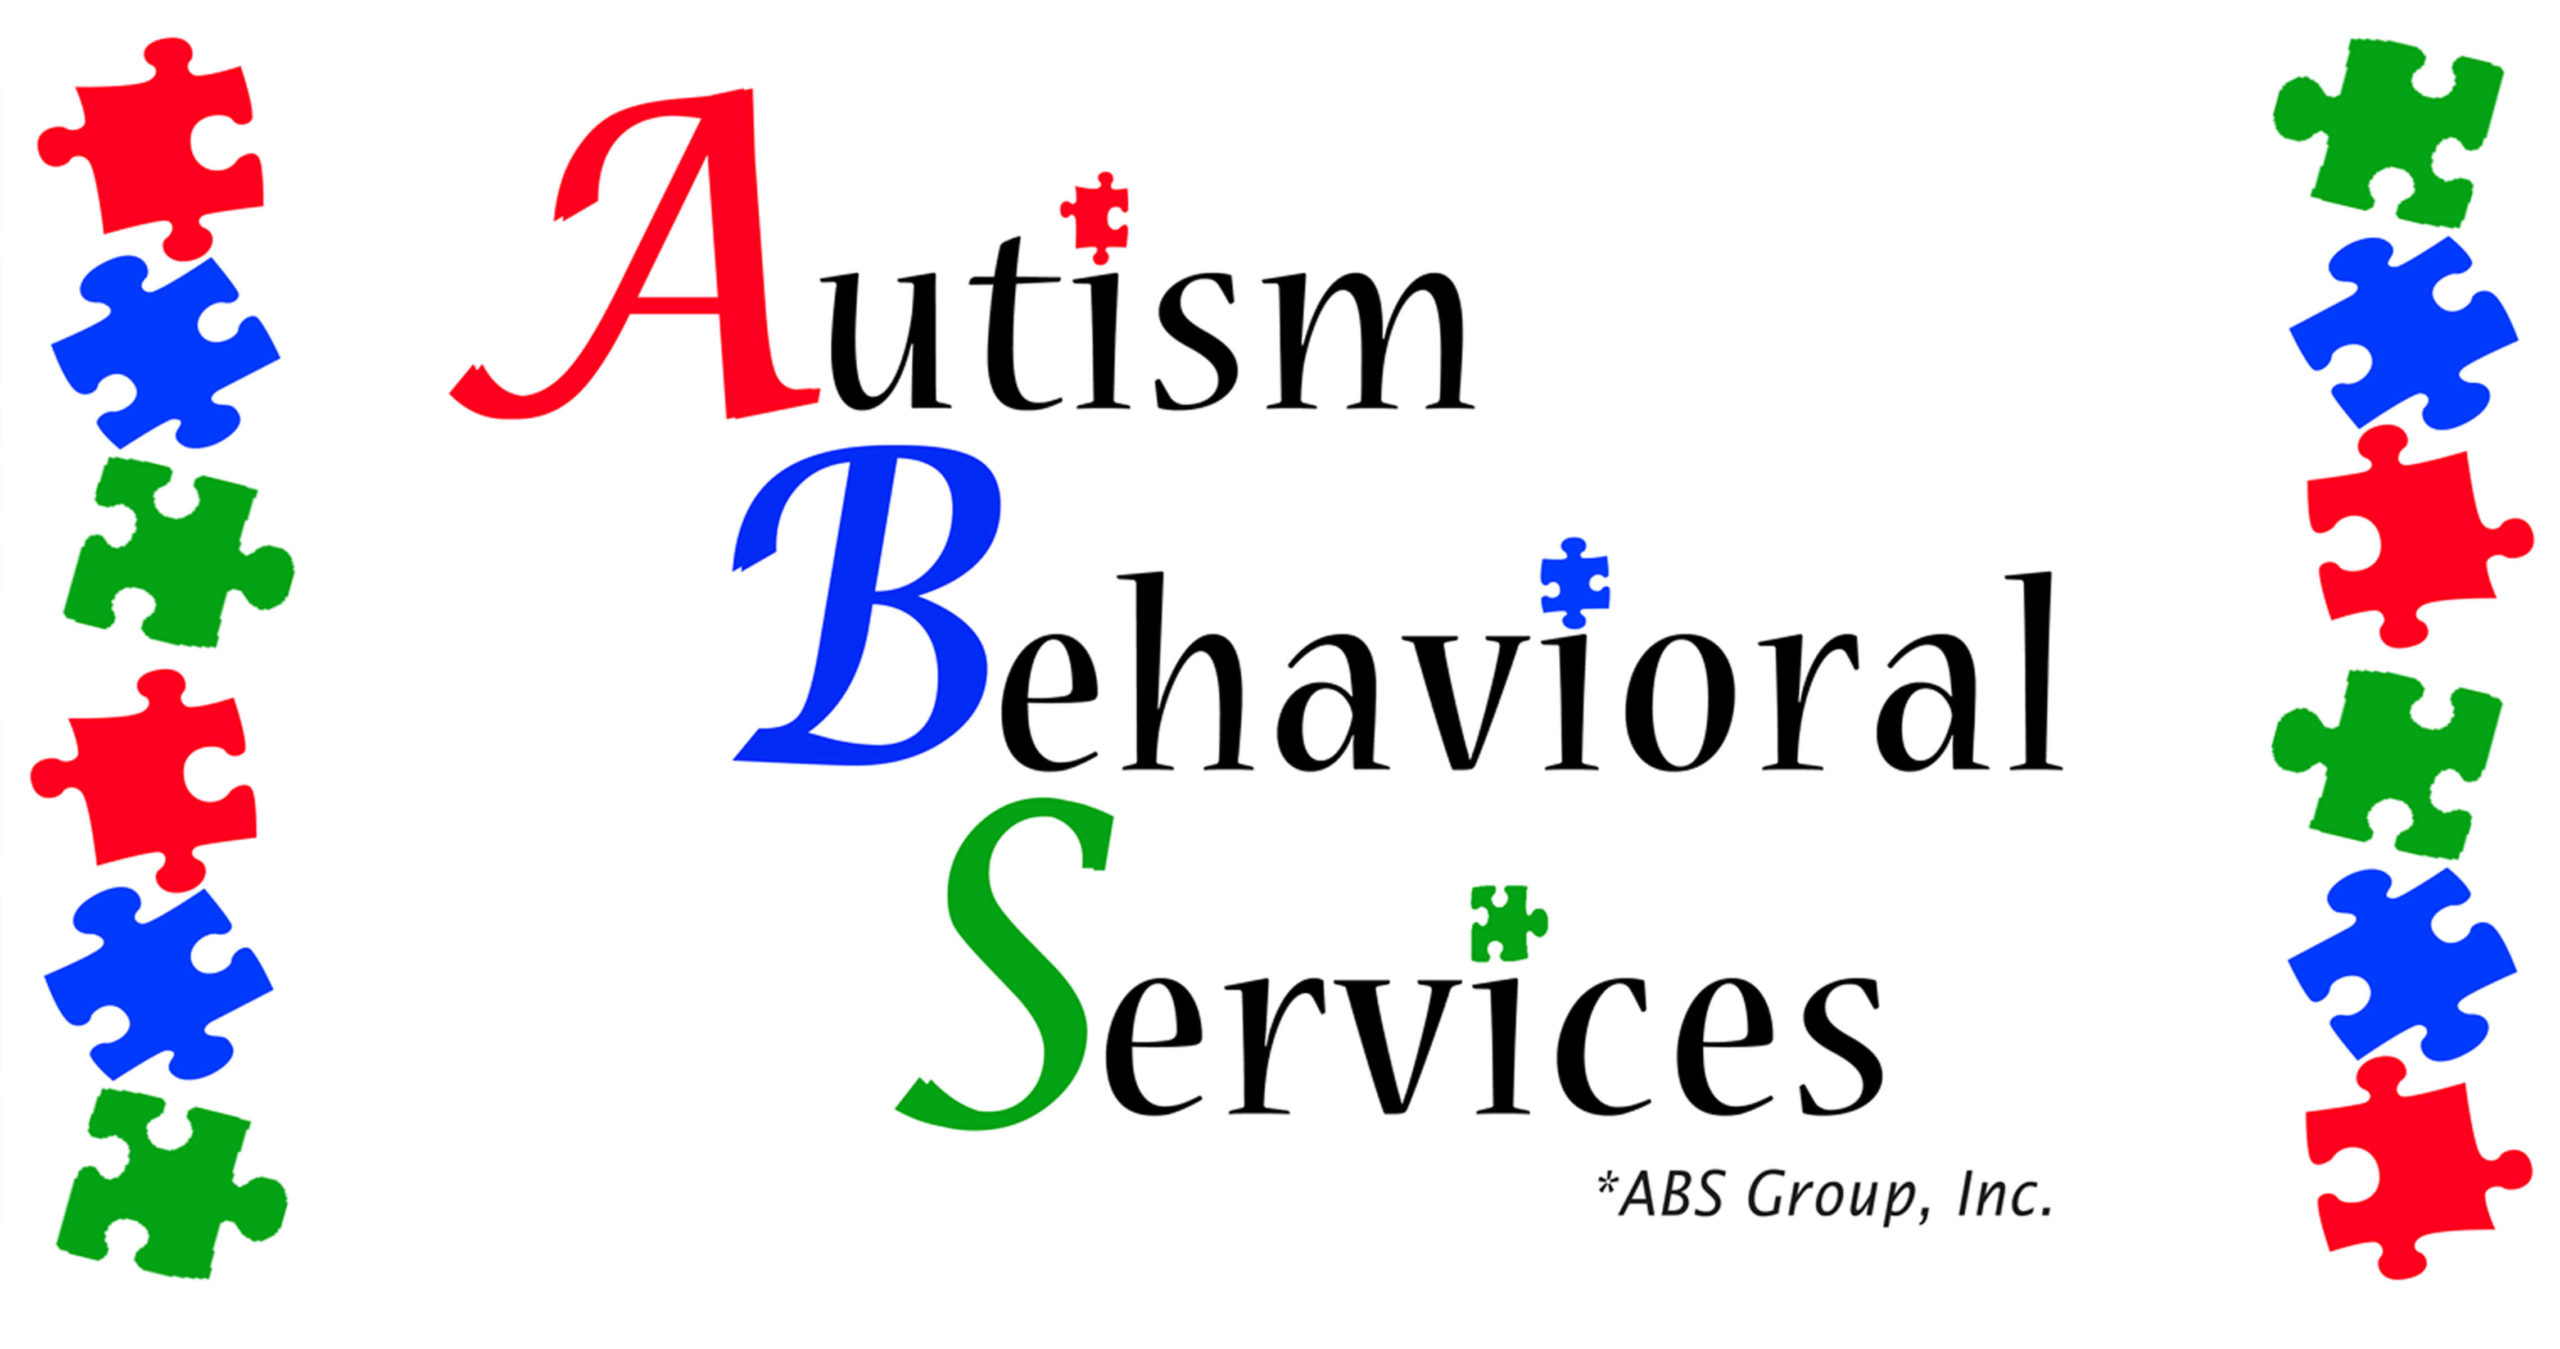 Autism Behavioral Services